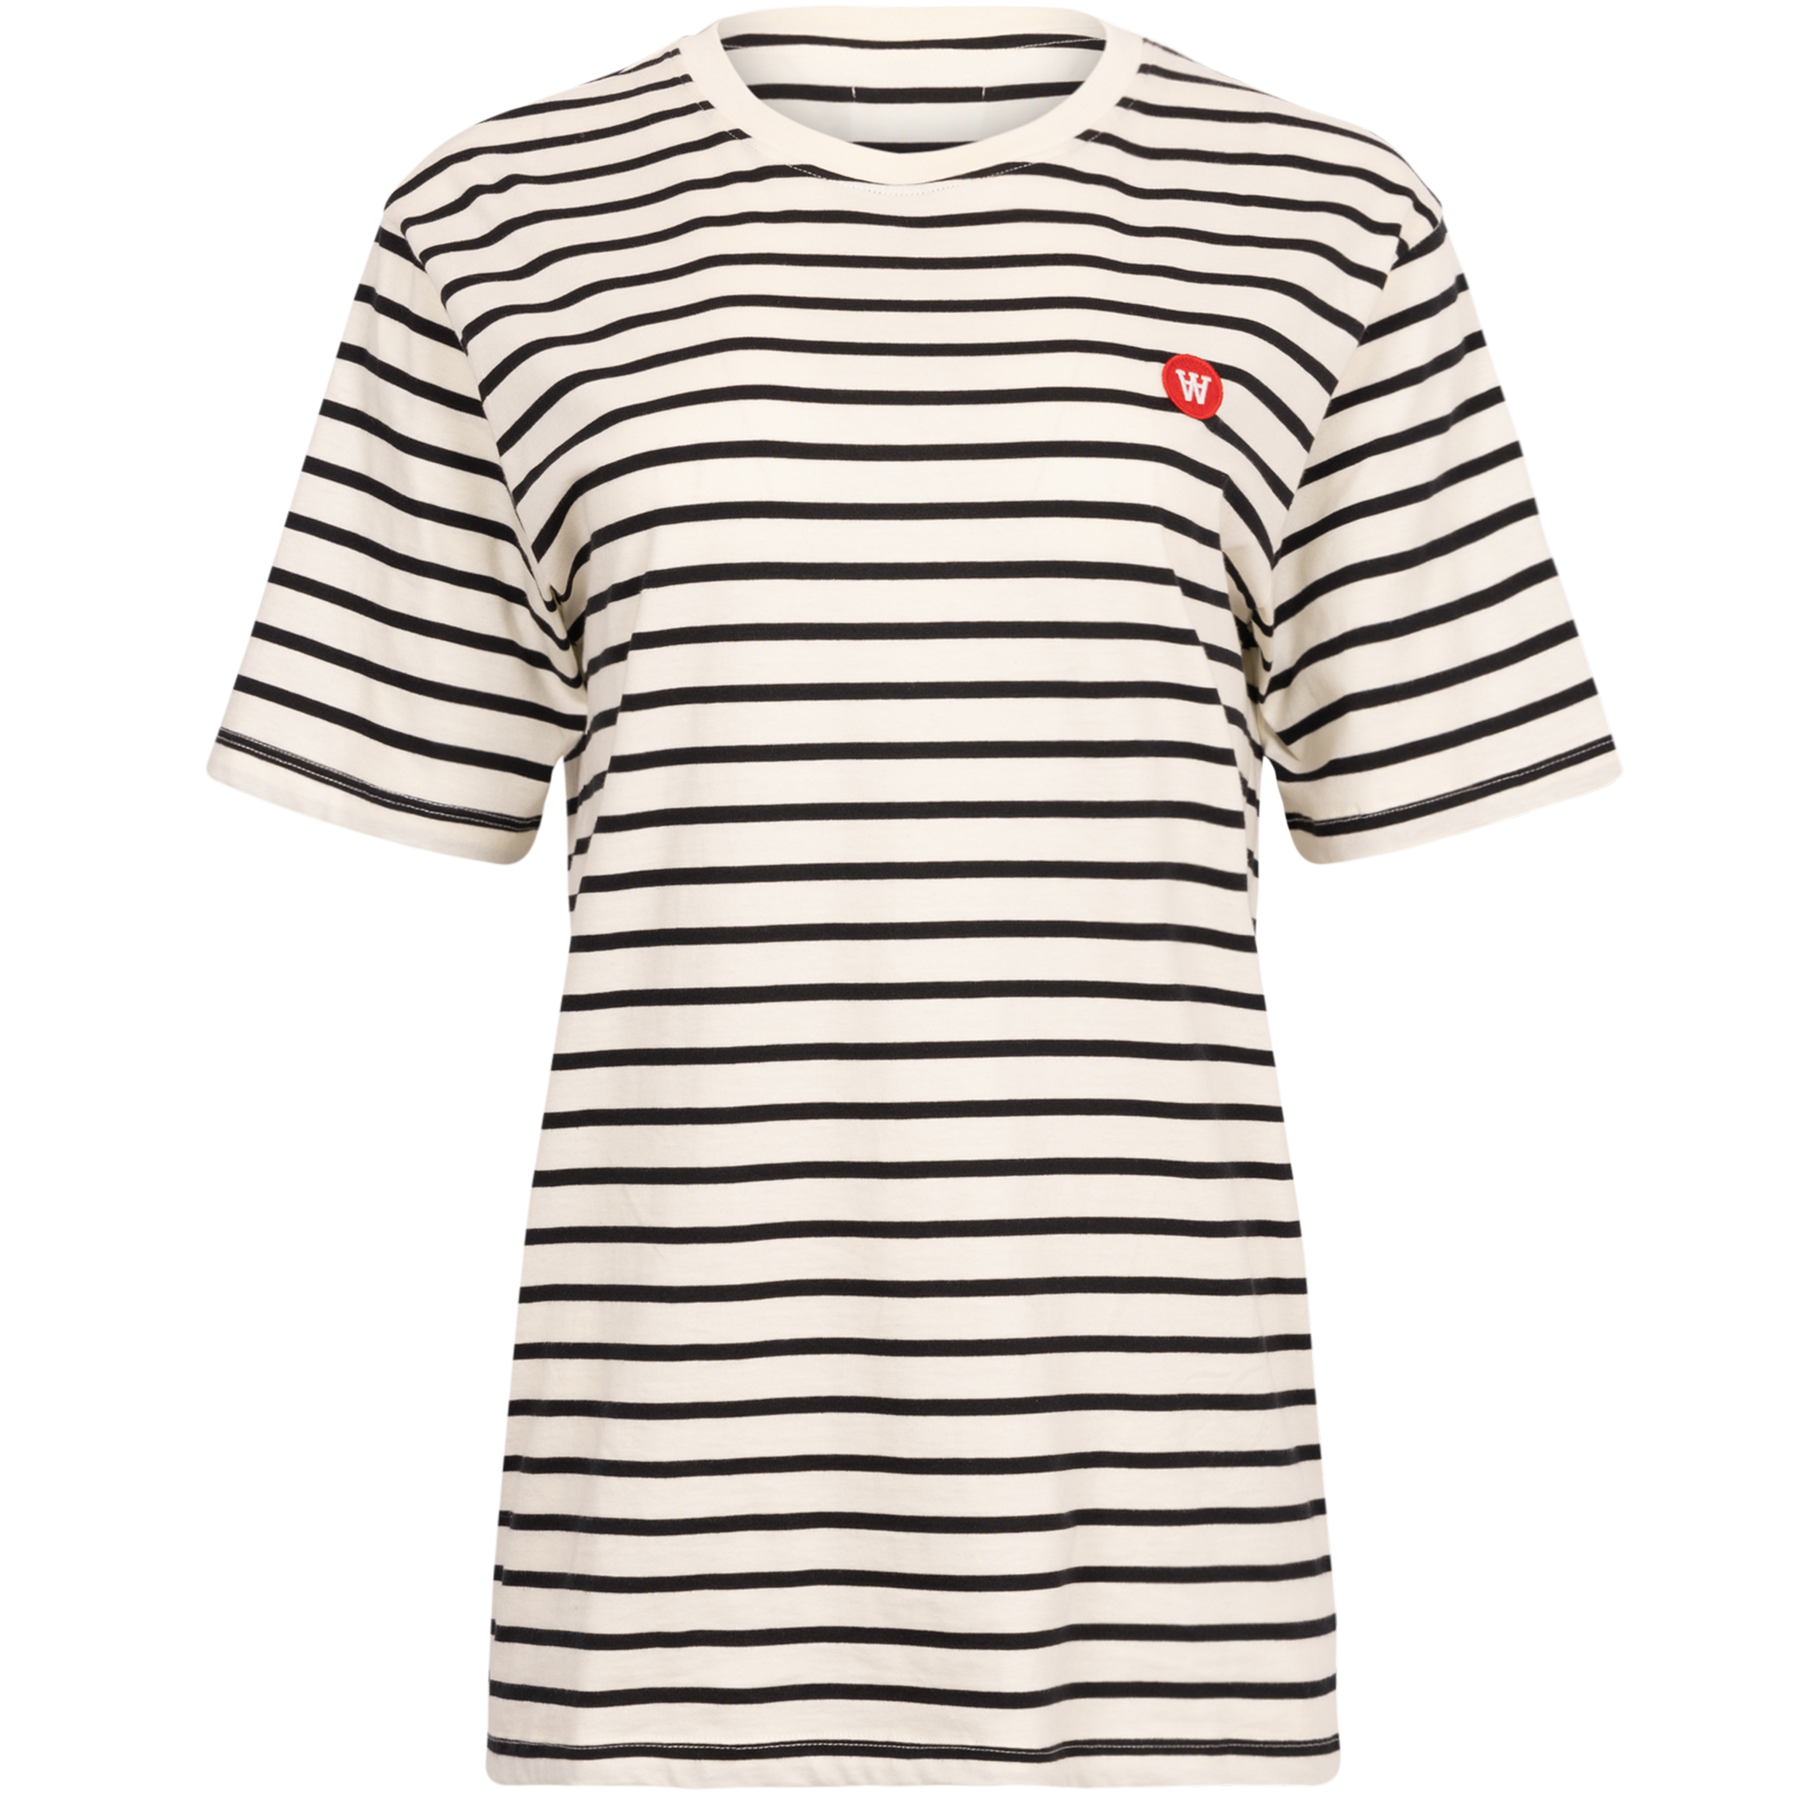 Ace Badge T-Shirt - Off-White/Black Stripes